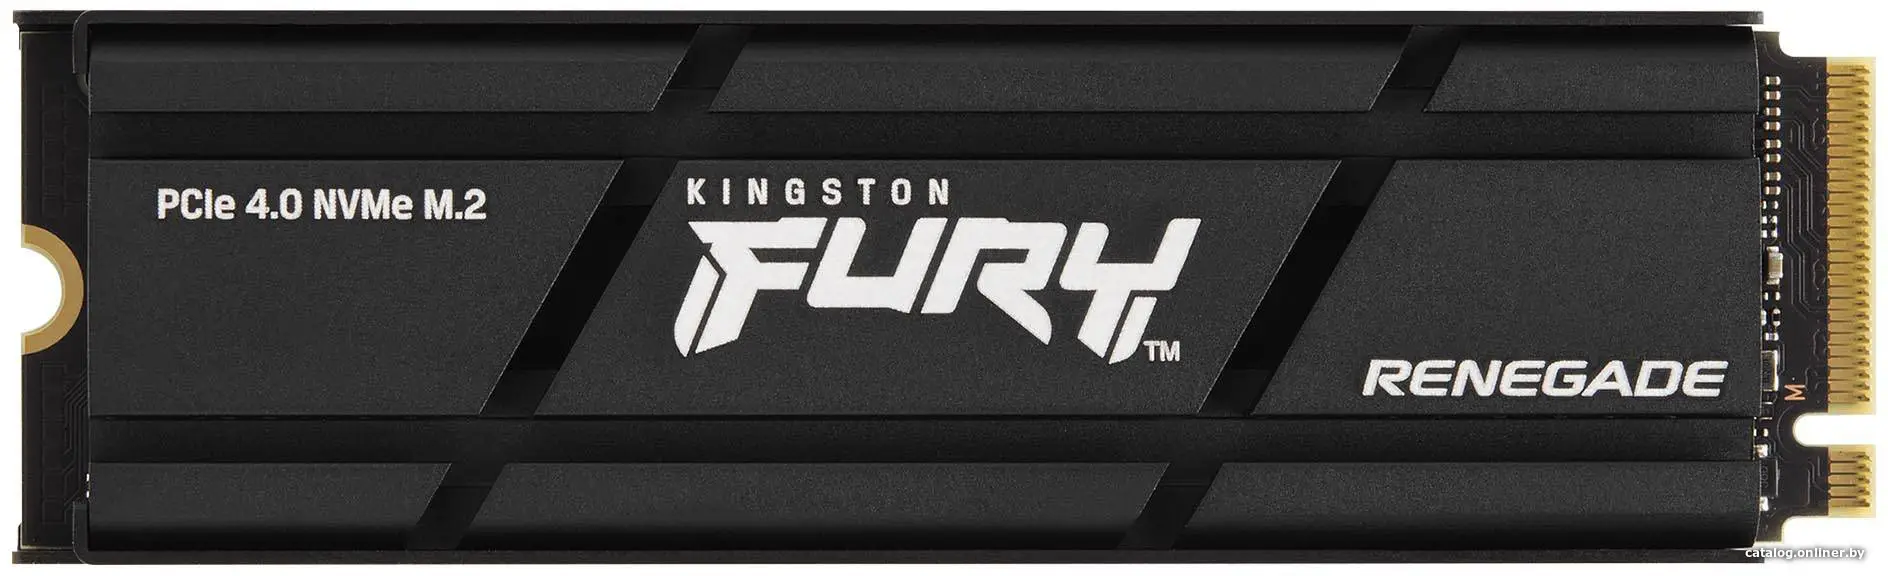 Купить KINGSTON FURY Renegade 1TB SSD with Heatsink, M.2 2280, PCIe 4.0 NVMe, Read/Write 7300/6000MB/s, Random Read/Write: 900K/1000K IOPS, цена, опт и розница